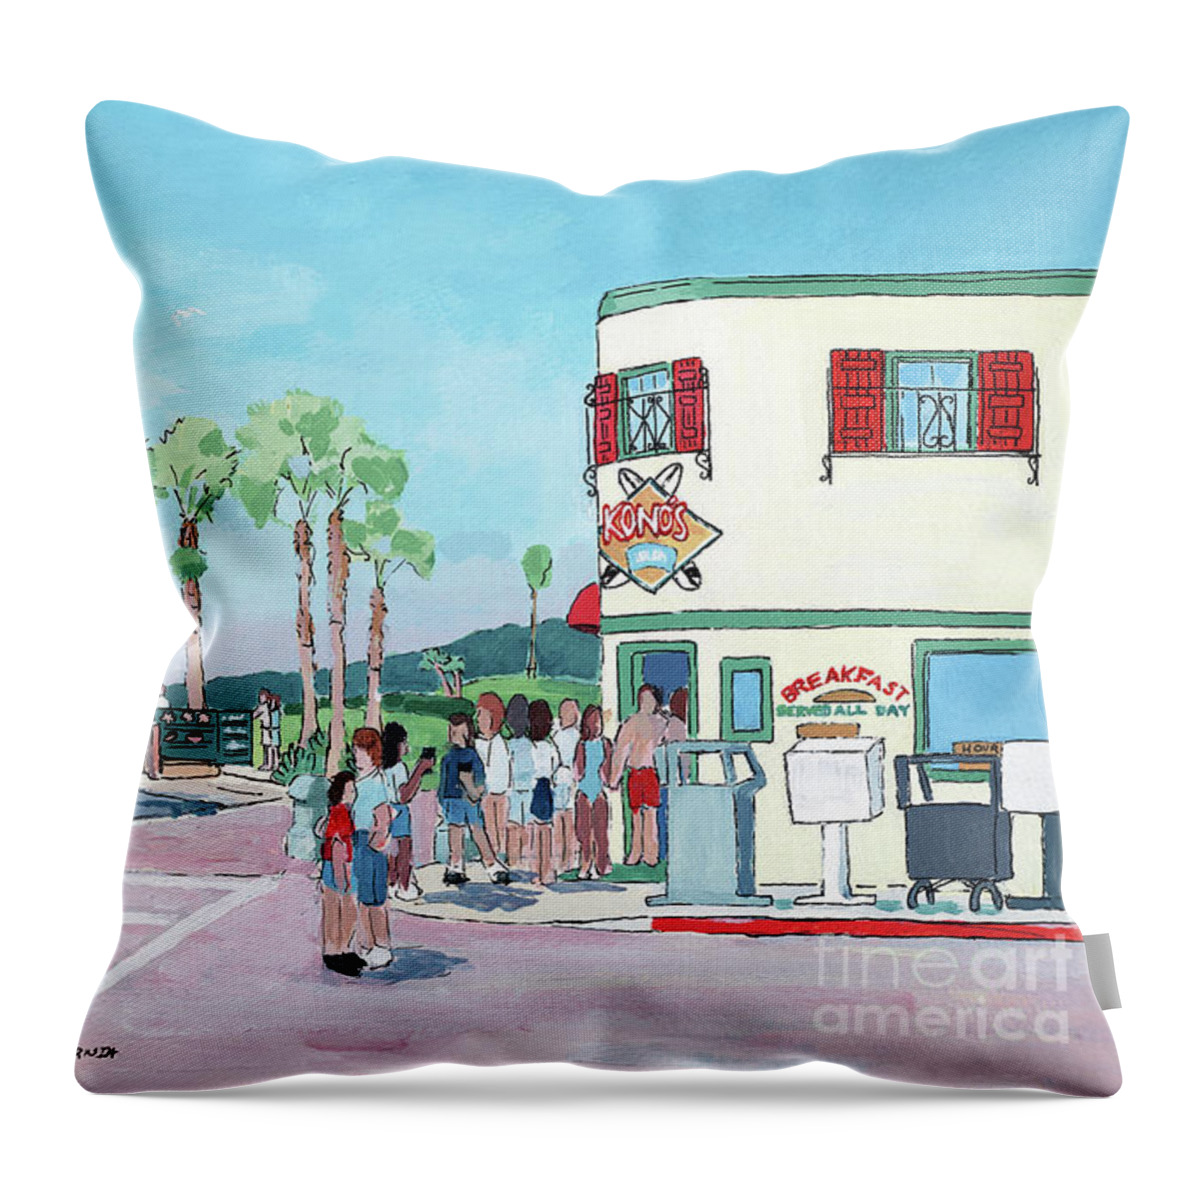 Konos Throw Pillow featuring the painting Konos Pacific Beach San Diego California by Paul Strahm